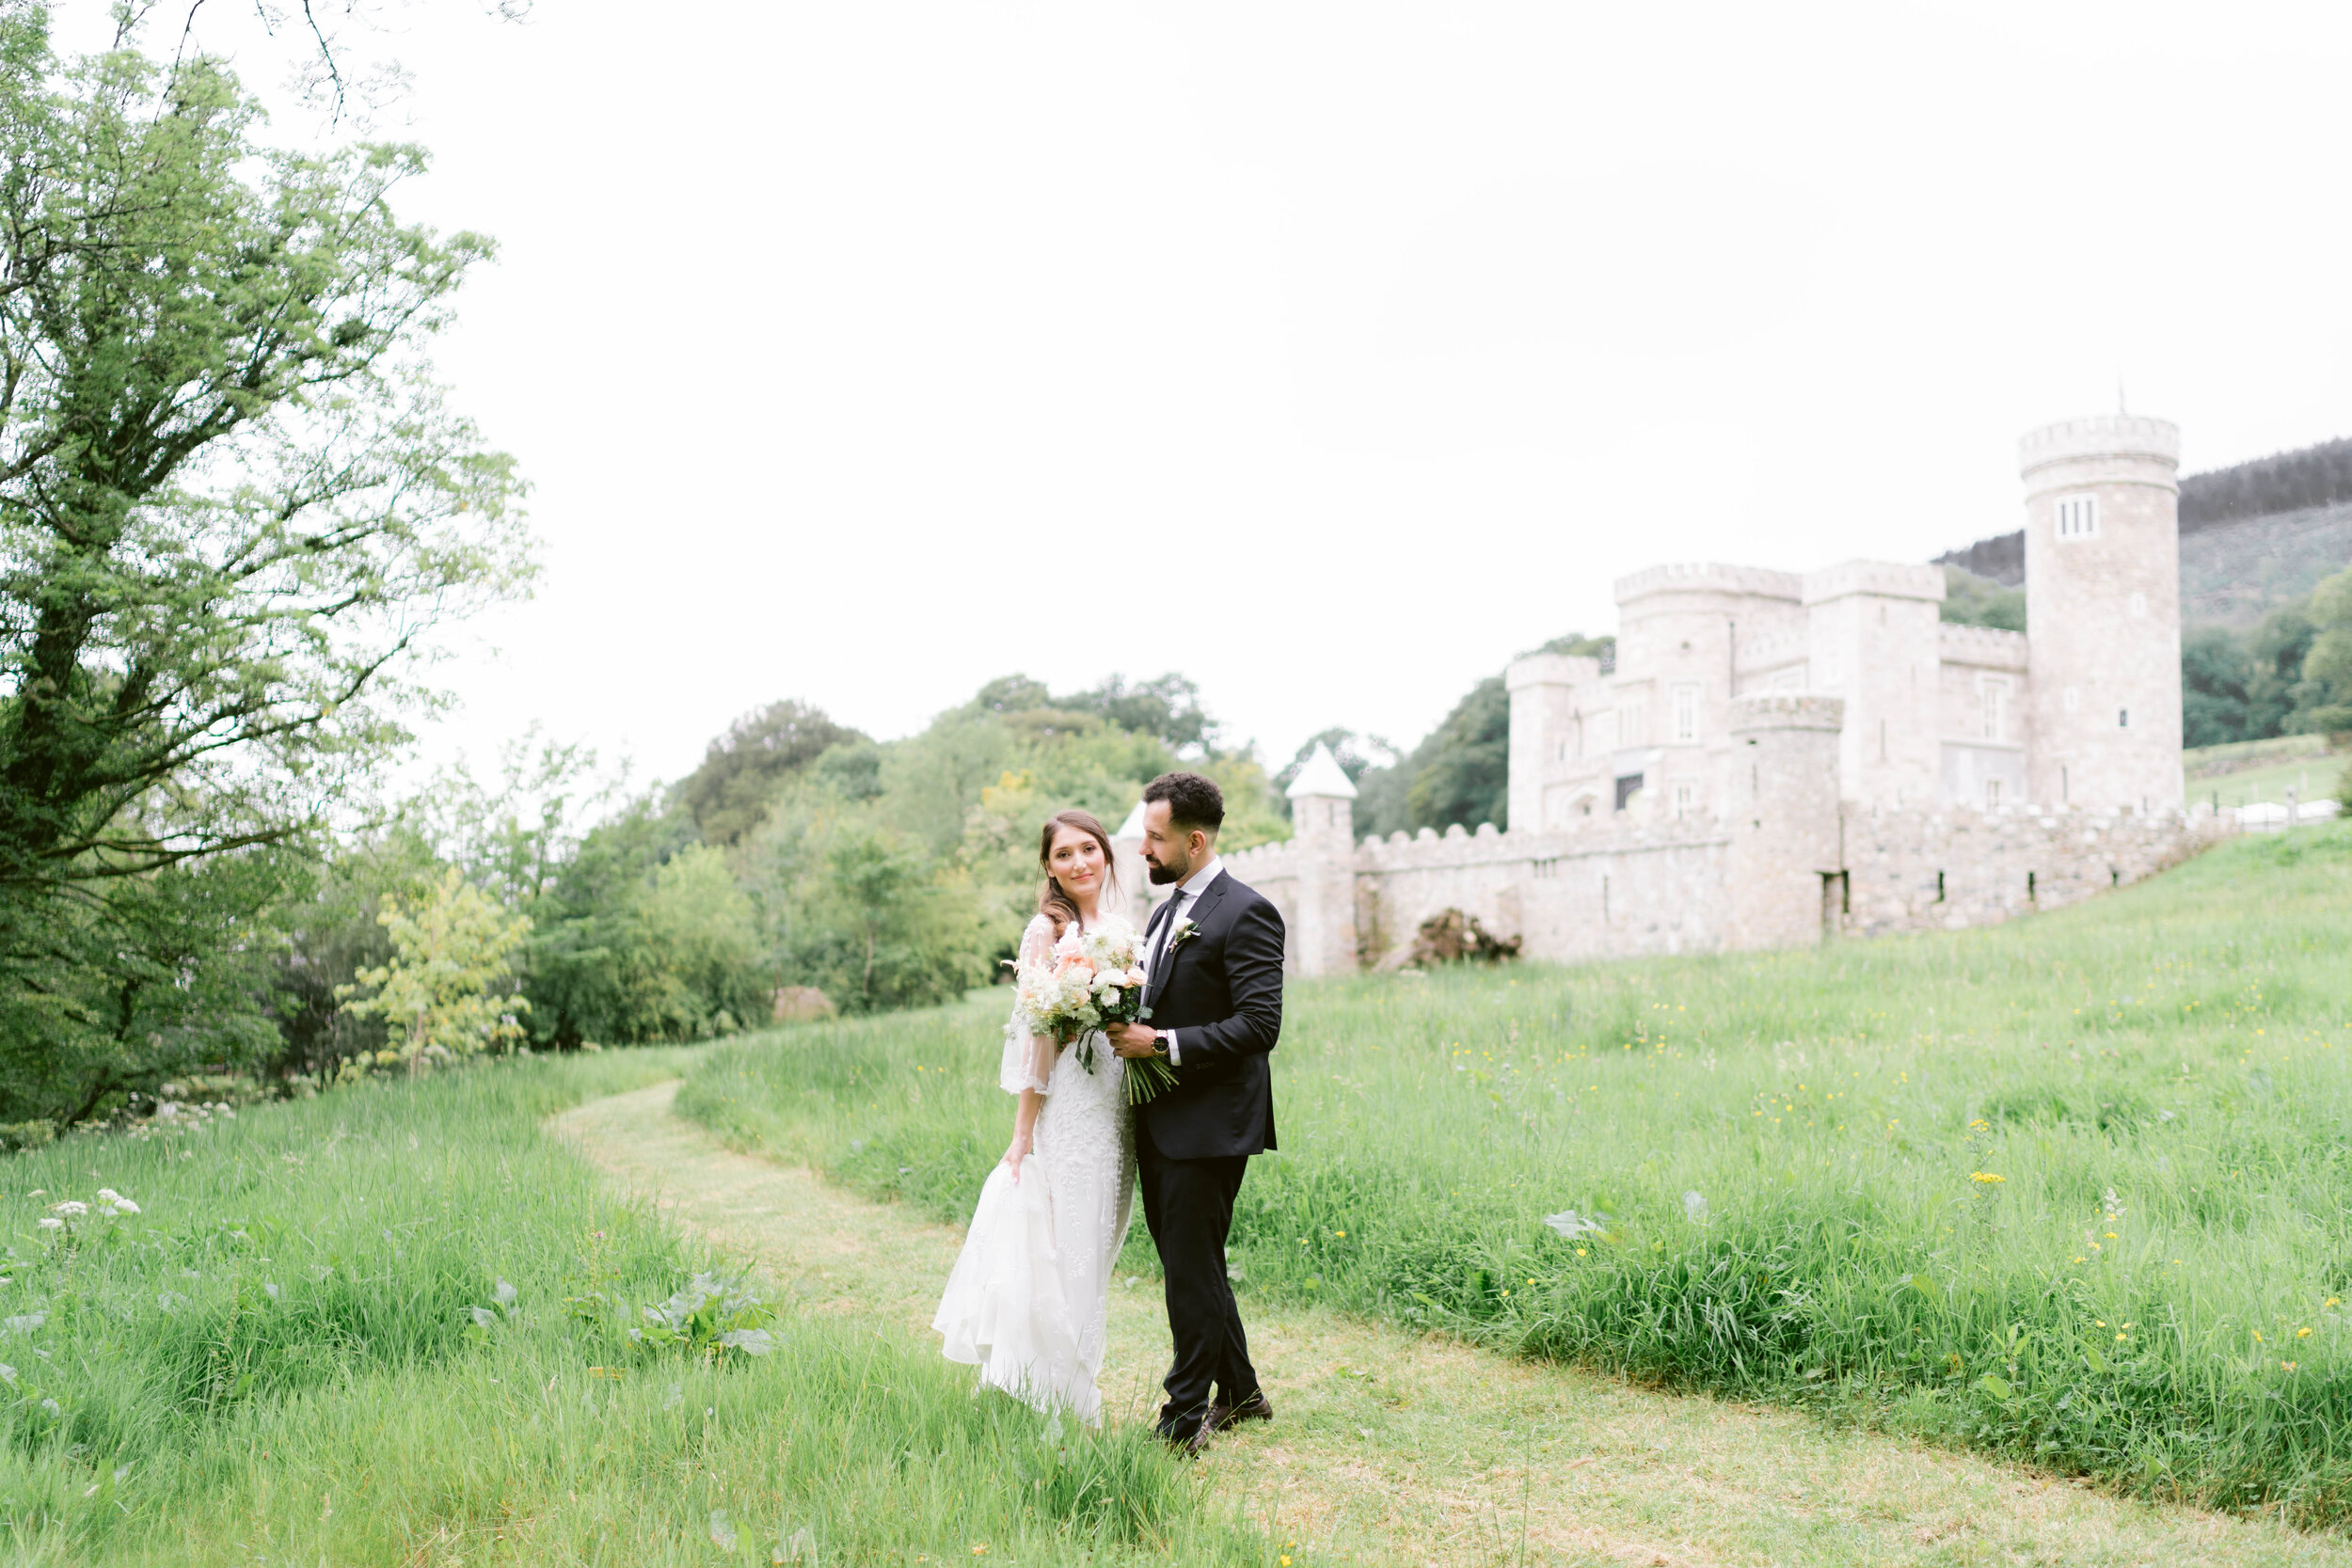 Killeavy Castle wedding Northern Ireland, micro wedding, Irish wedding inspiration, castle wedding, romantic wedding, outdoor tiny wedding inspiration (100).jpg